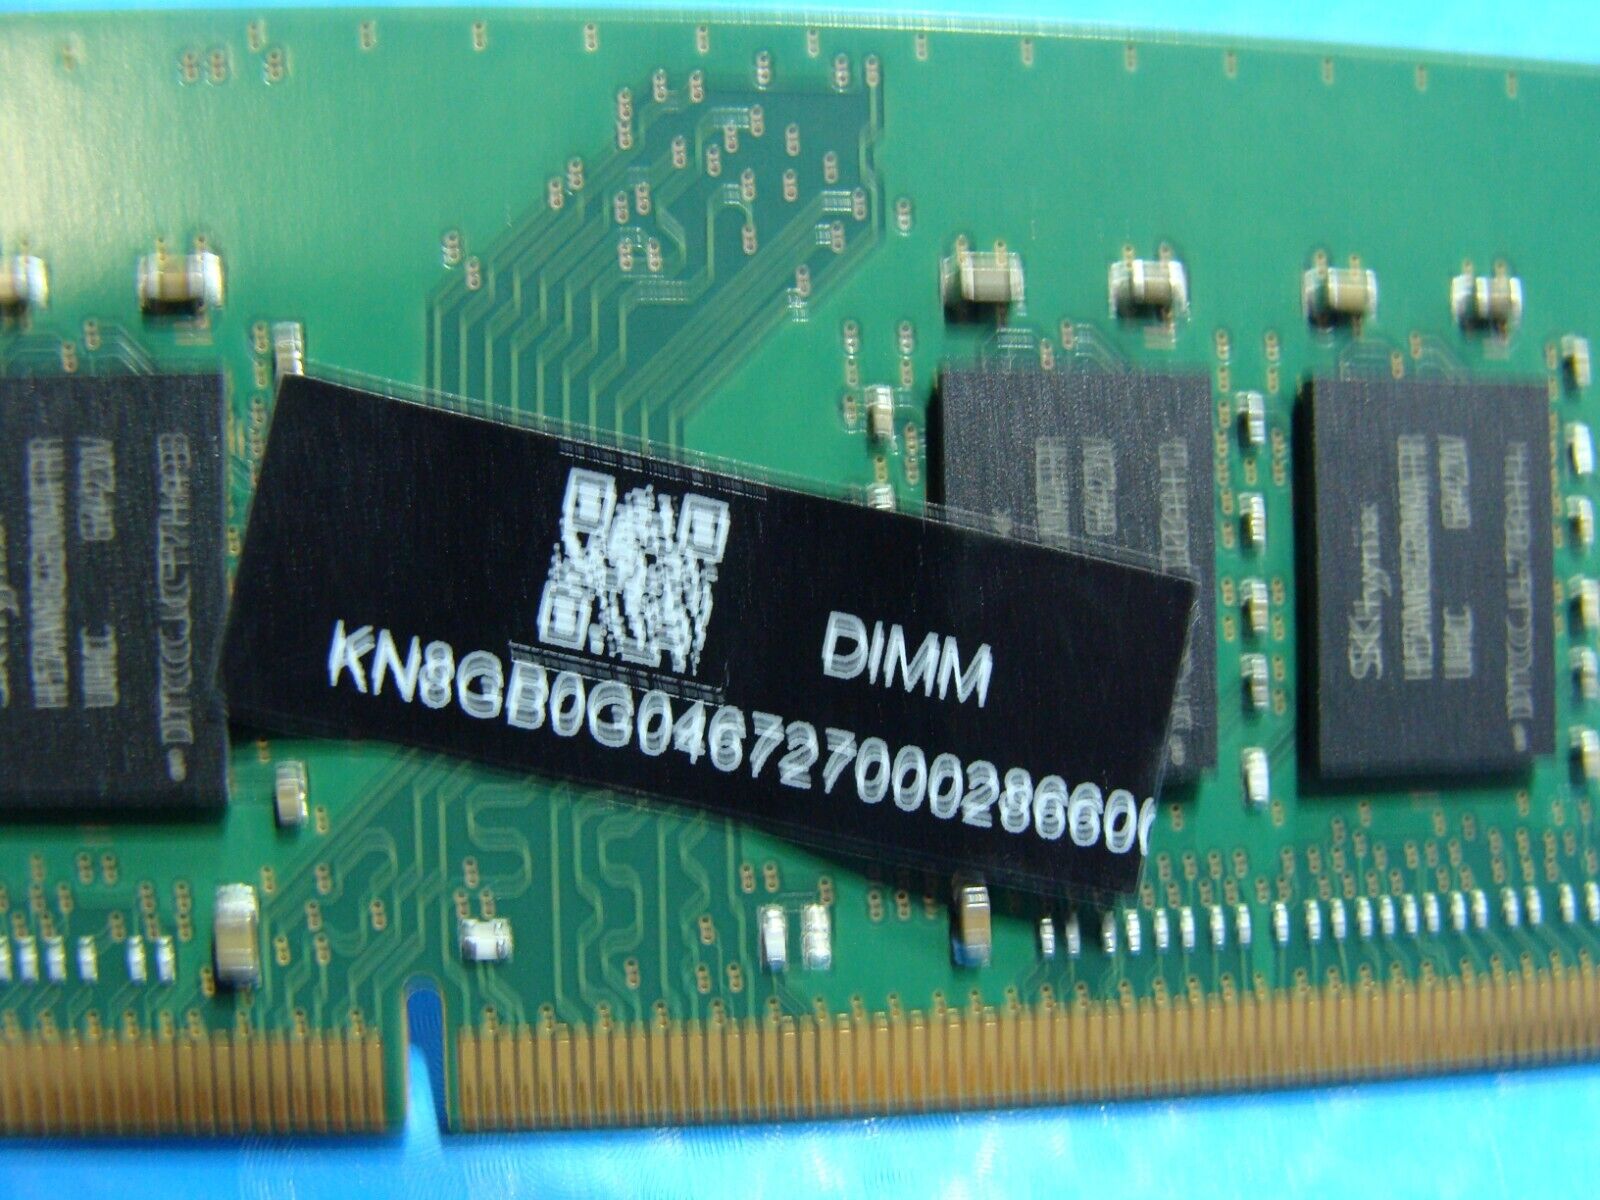 Acer SP513-51 So-Dimm SK Hynix 8GB 1Rx8 Memory Ram PC4-2400T HMA81GS6AFR8N-UH